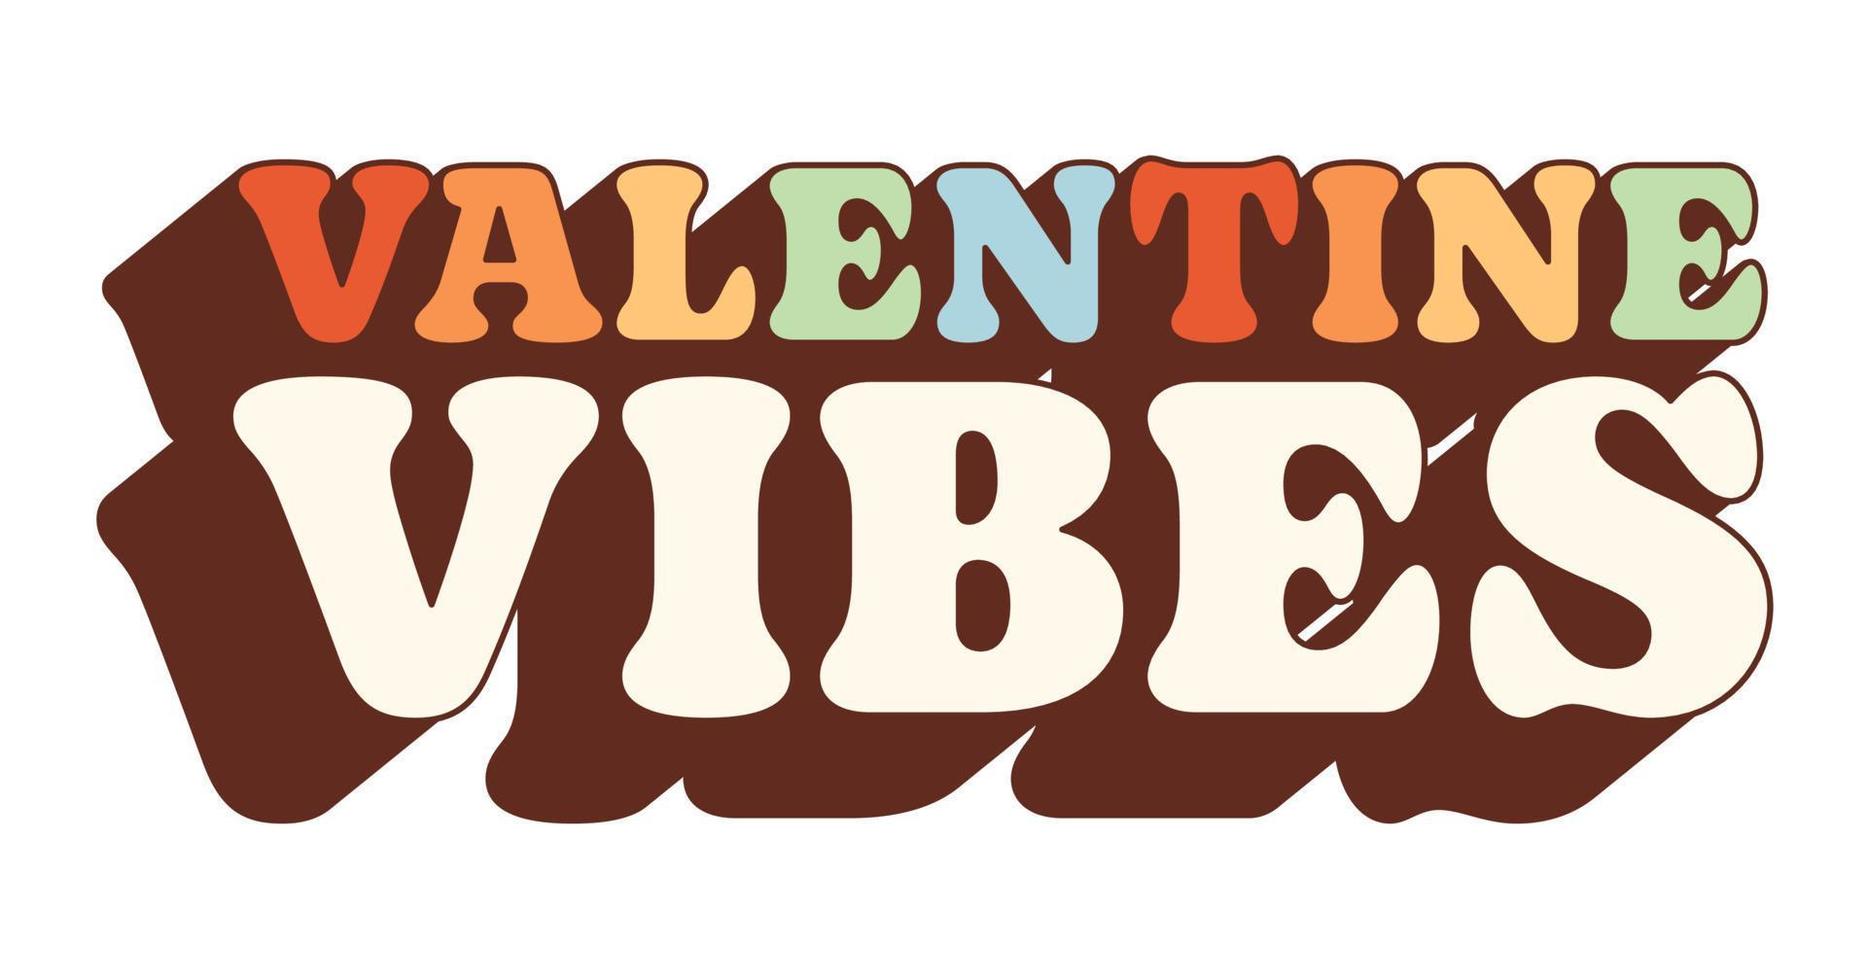 retro häftig valentines dag text. trendig hippie stil. vibrafon i 70-tal. valentine vibrafon. vektor